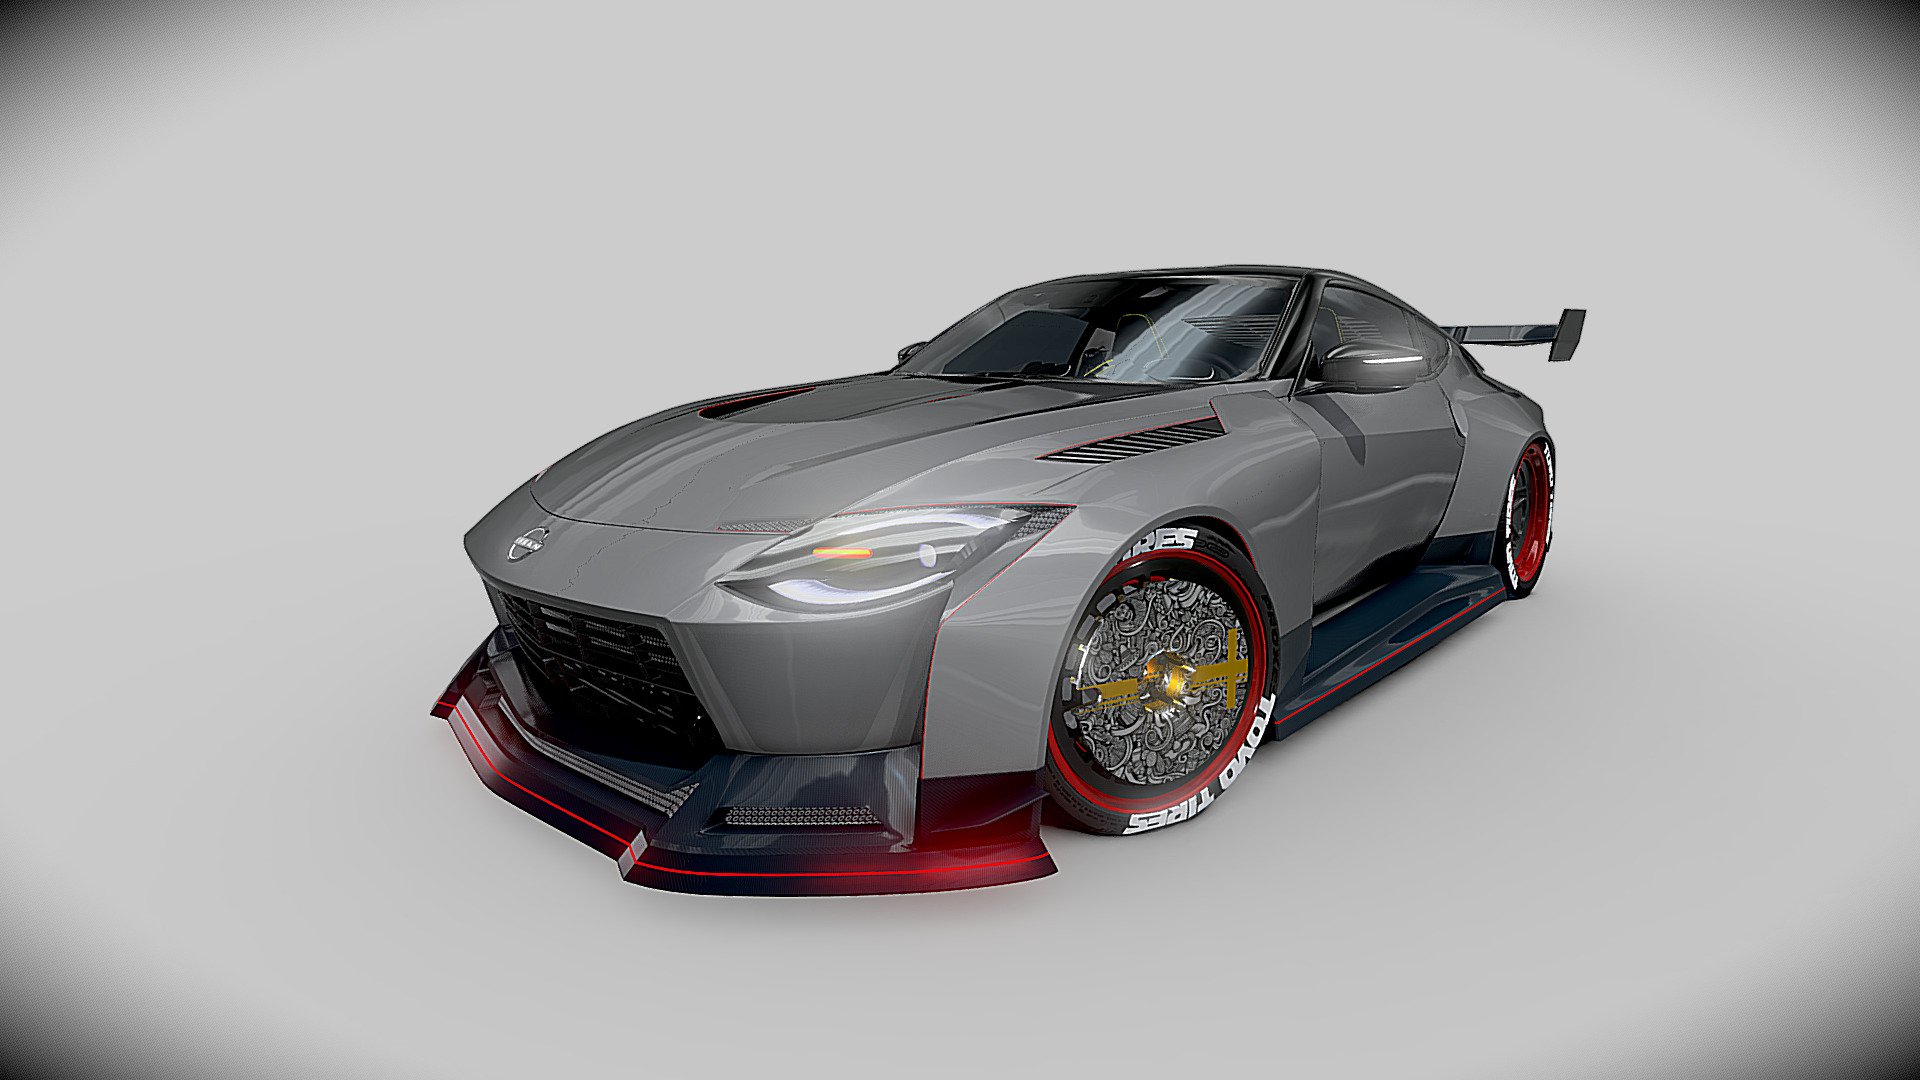 Nissan 400z - Hycade Edition

Bodykit based on: https://www.youtube.com/watch?v=1_I7pQ4s8_g - Nissan 400z - Hycade Edition - 3D model by OGL (@GaryLim) 3d model